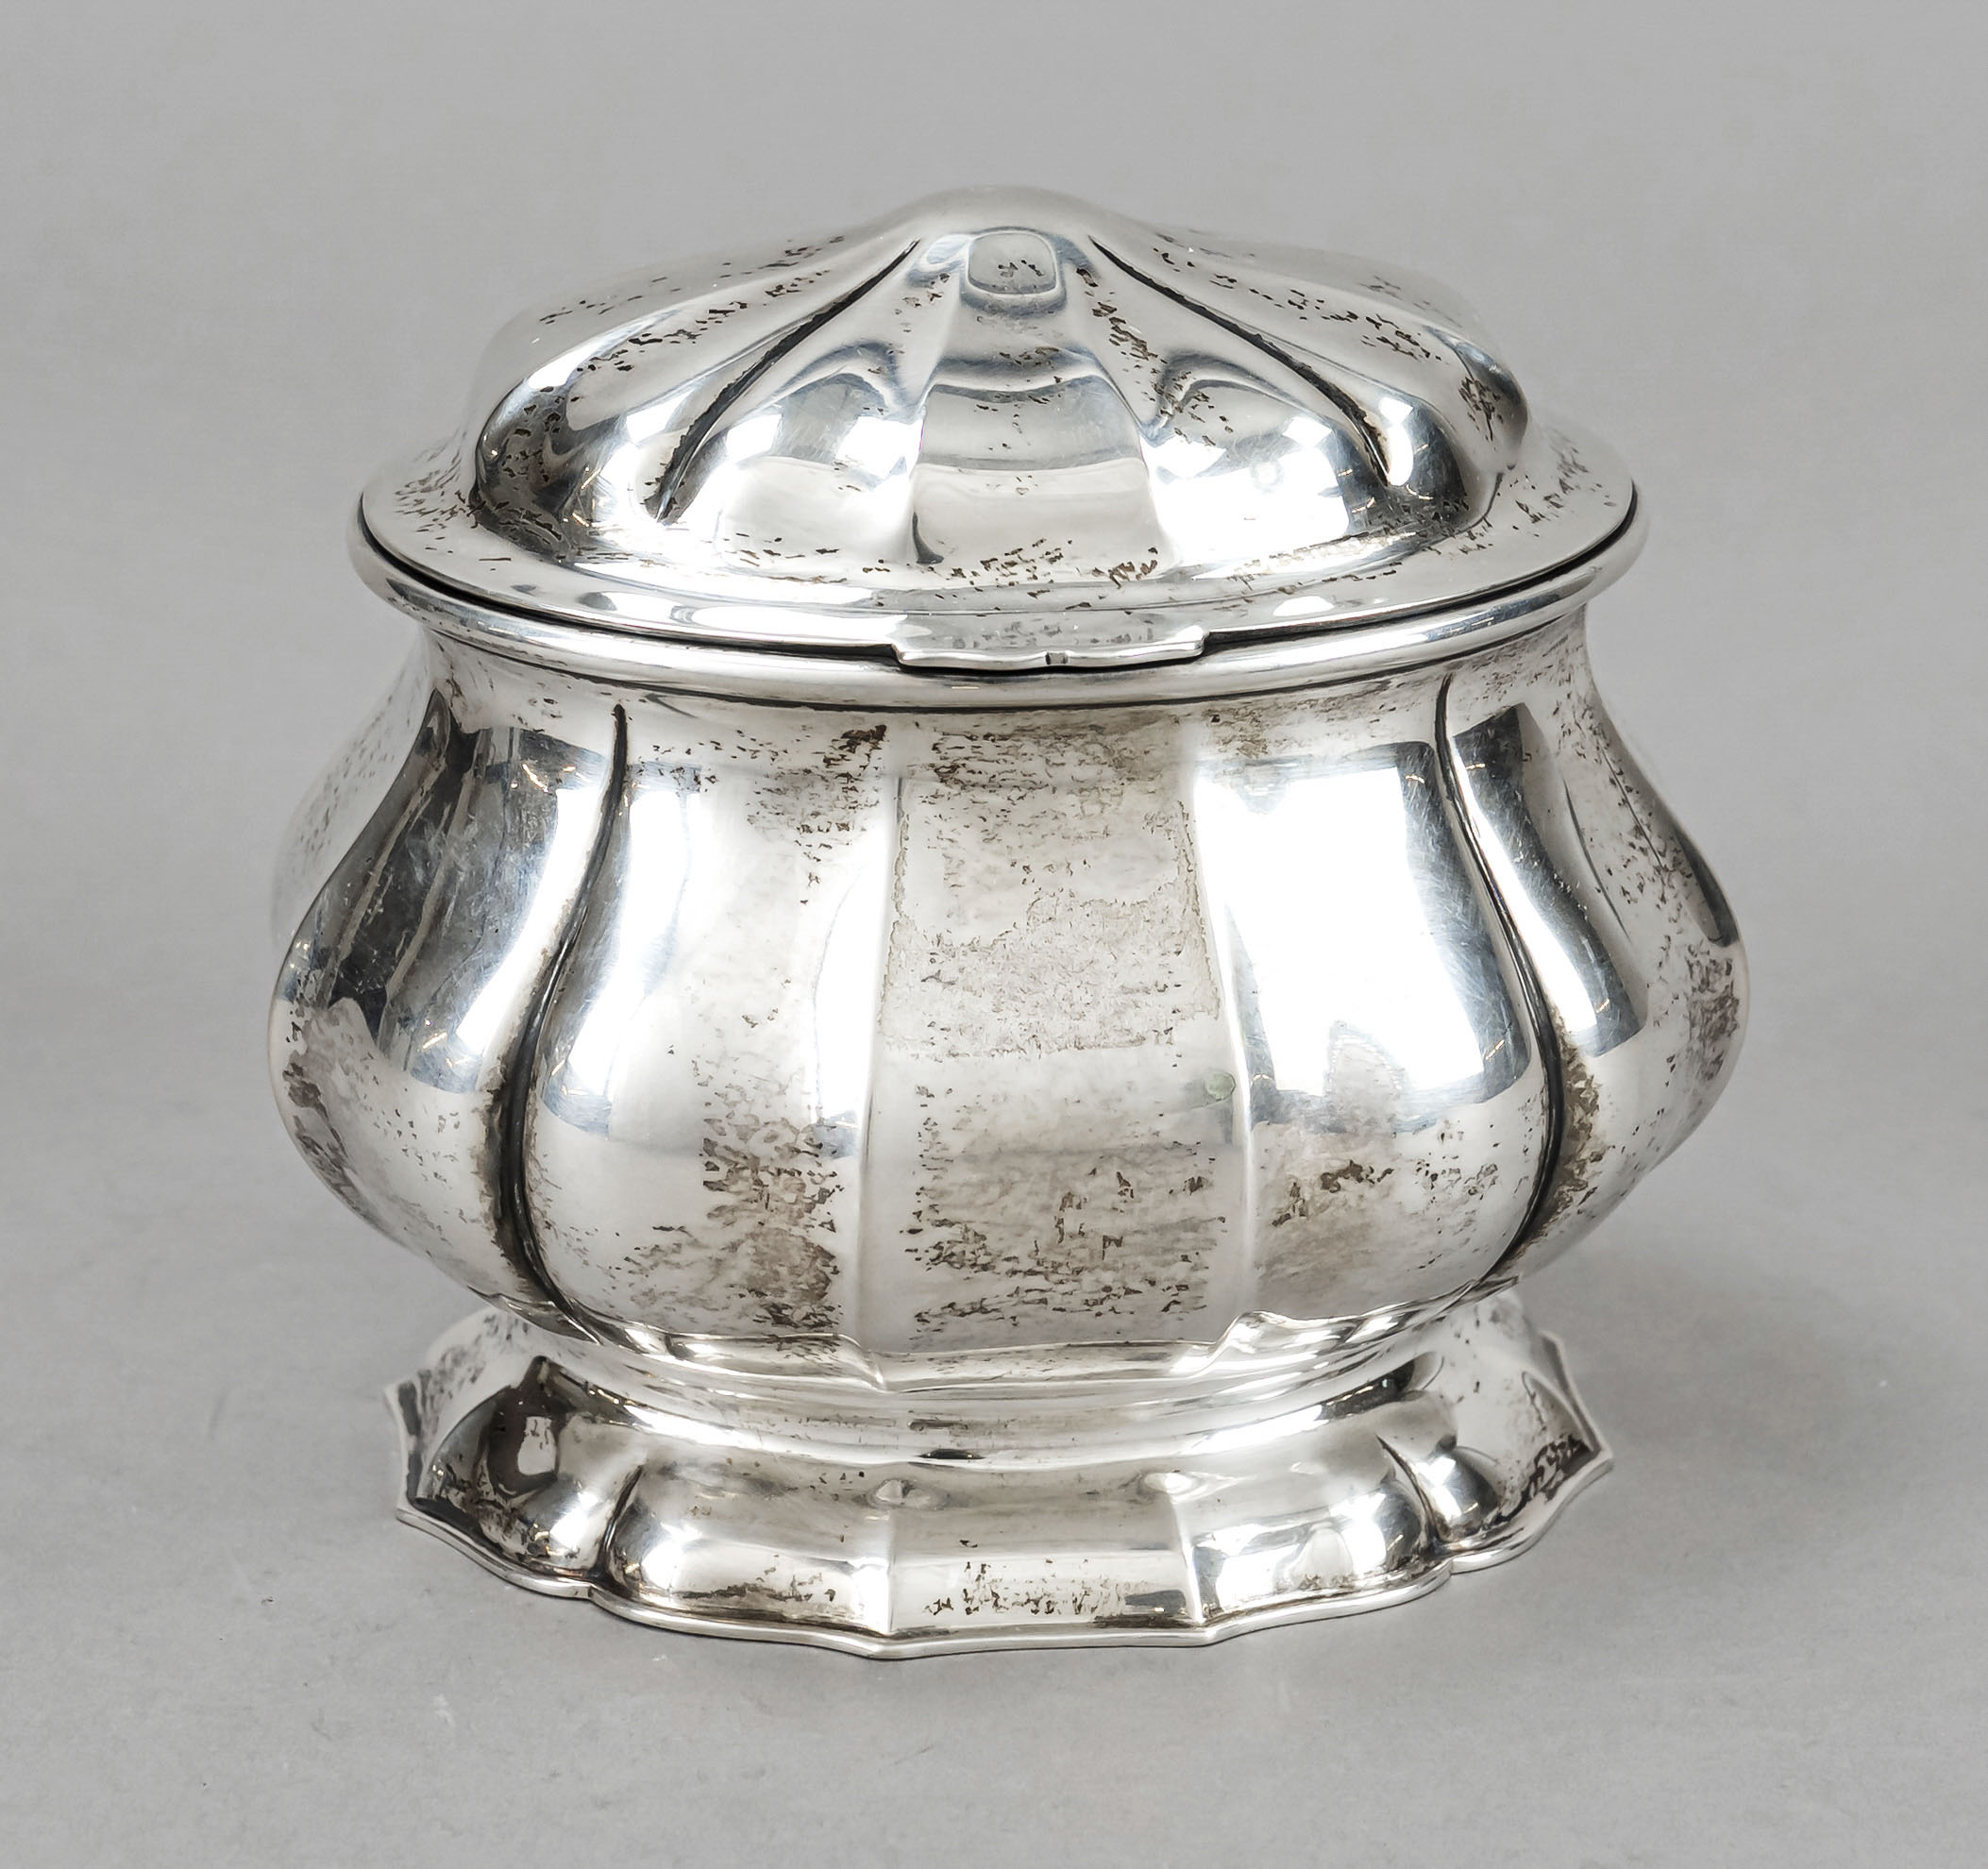 Oval lidded sugar bowl, German, 20th century, marked M. Hansen, silver 800/000, gilt interior,